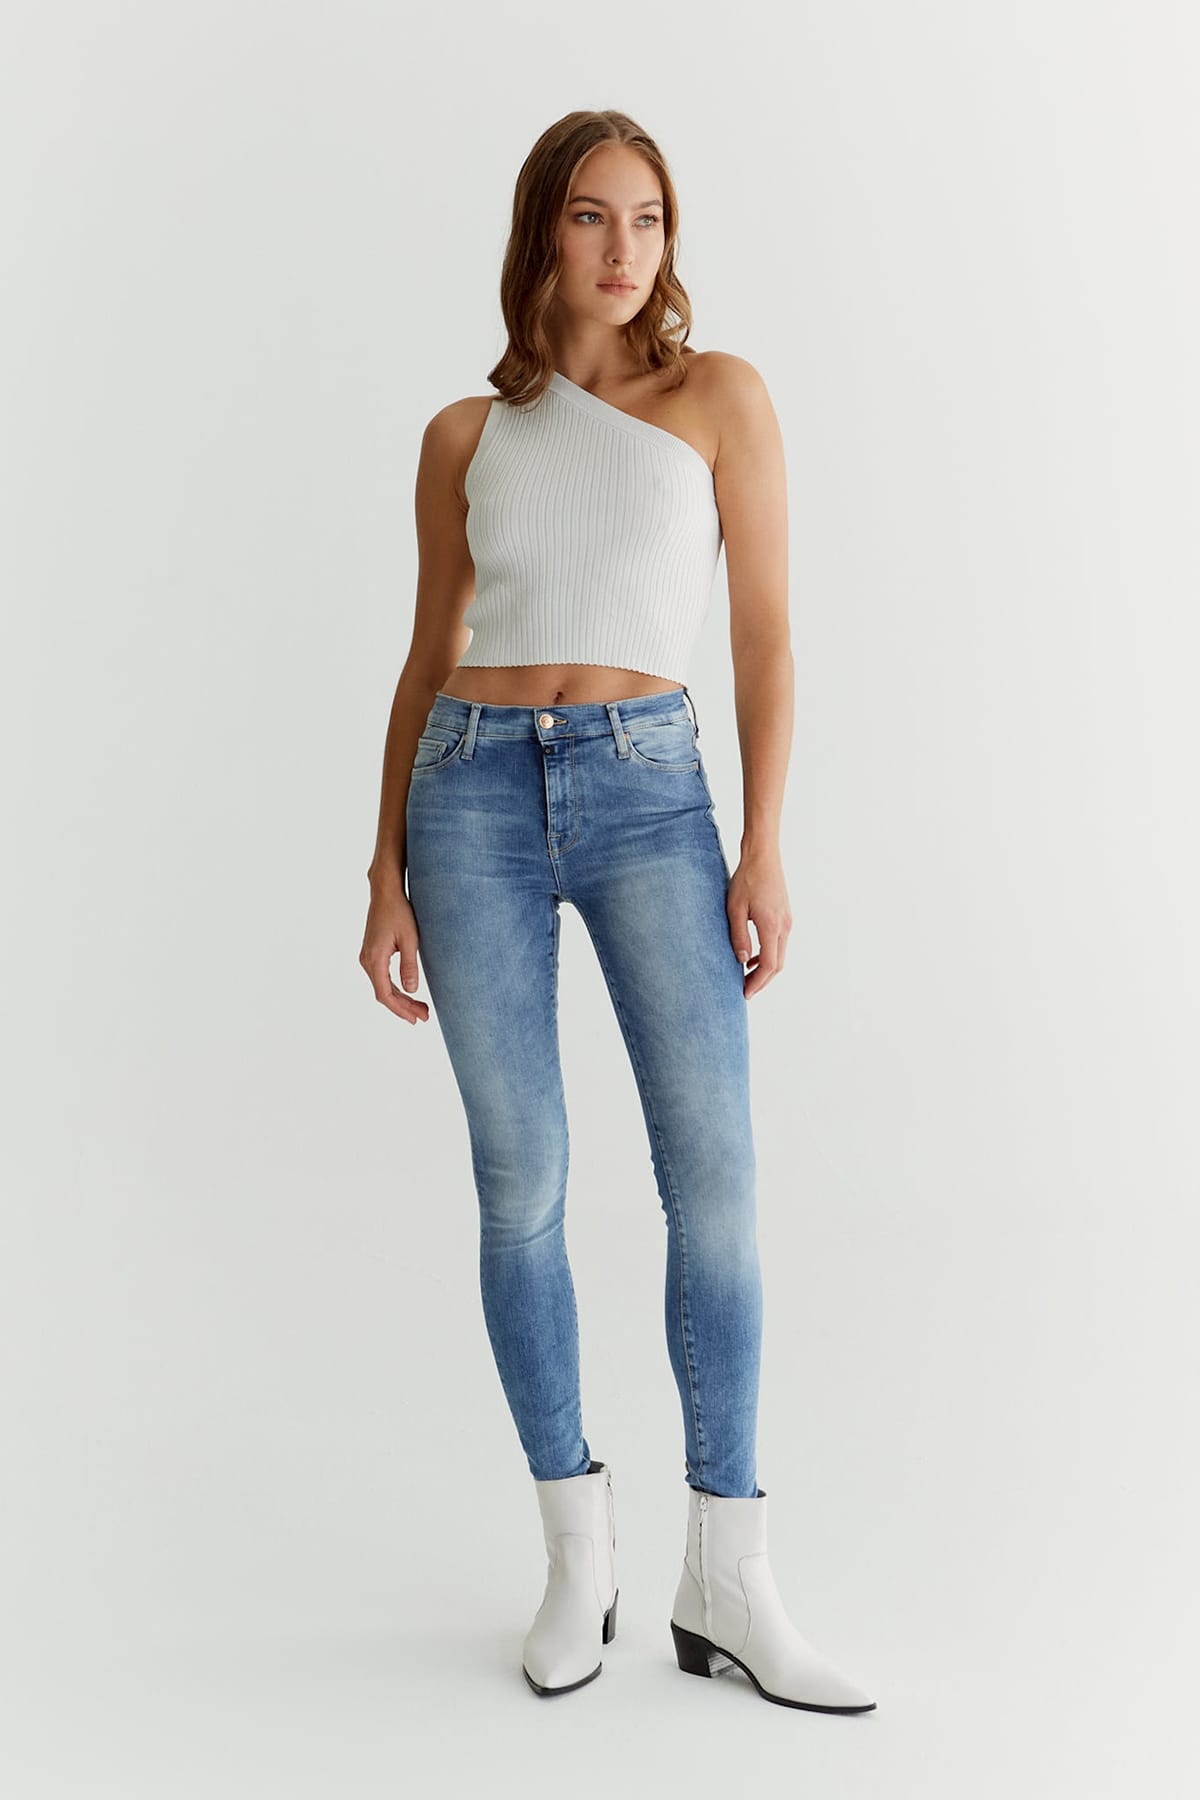 Skinny Jeans Sophia - Medium Blue Jeans C.O.J - Cup of Joe Denim 